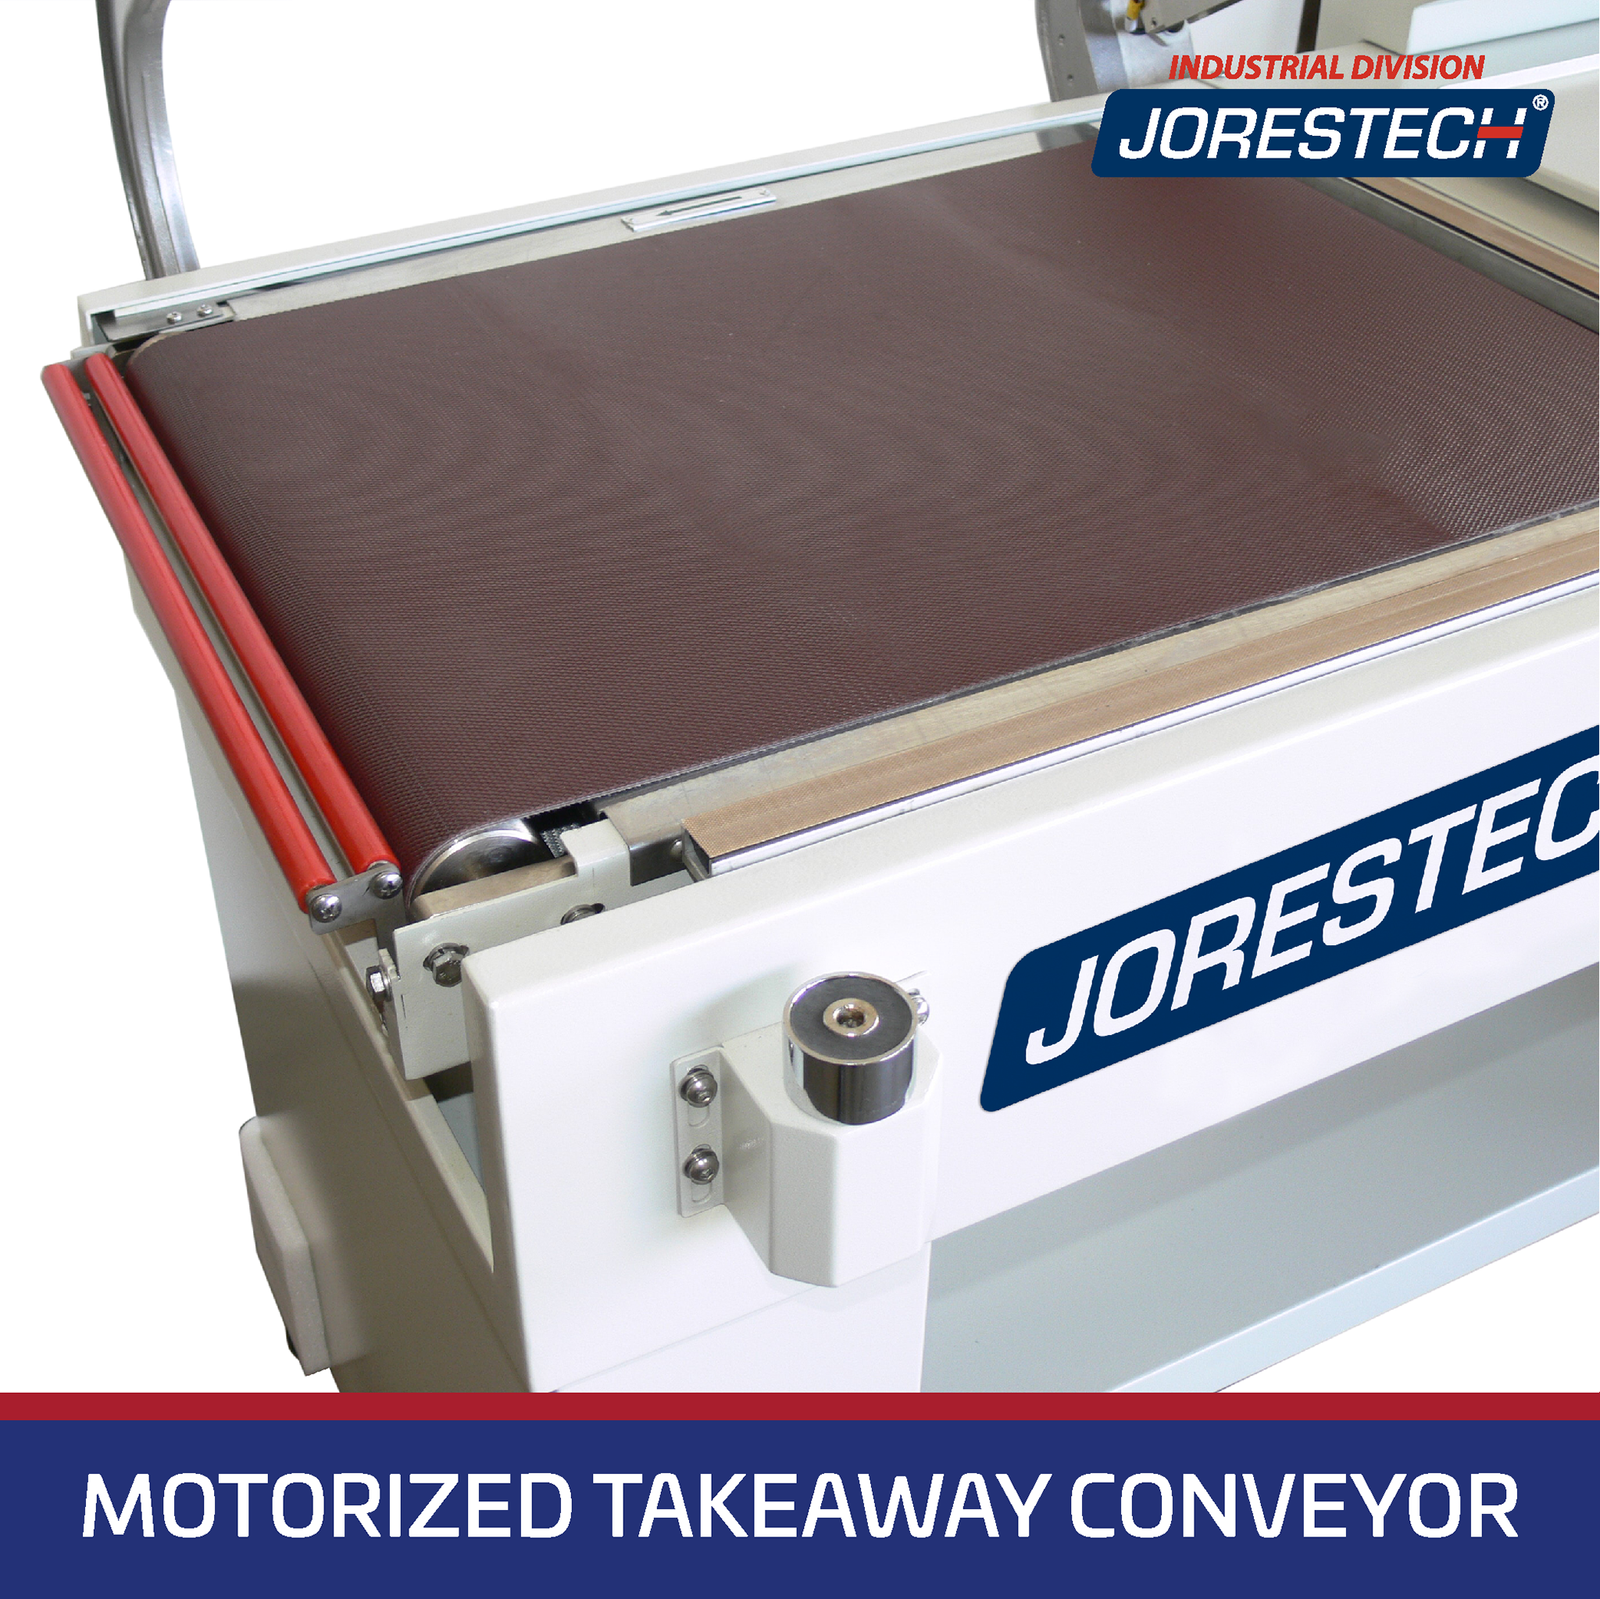 Closeup showing the motorized take away conveyor of the JORES TECHNOLOGIES® L bar sealer.